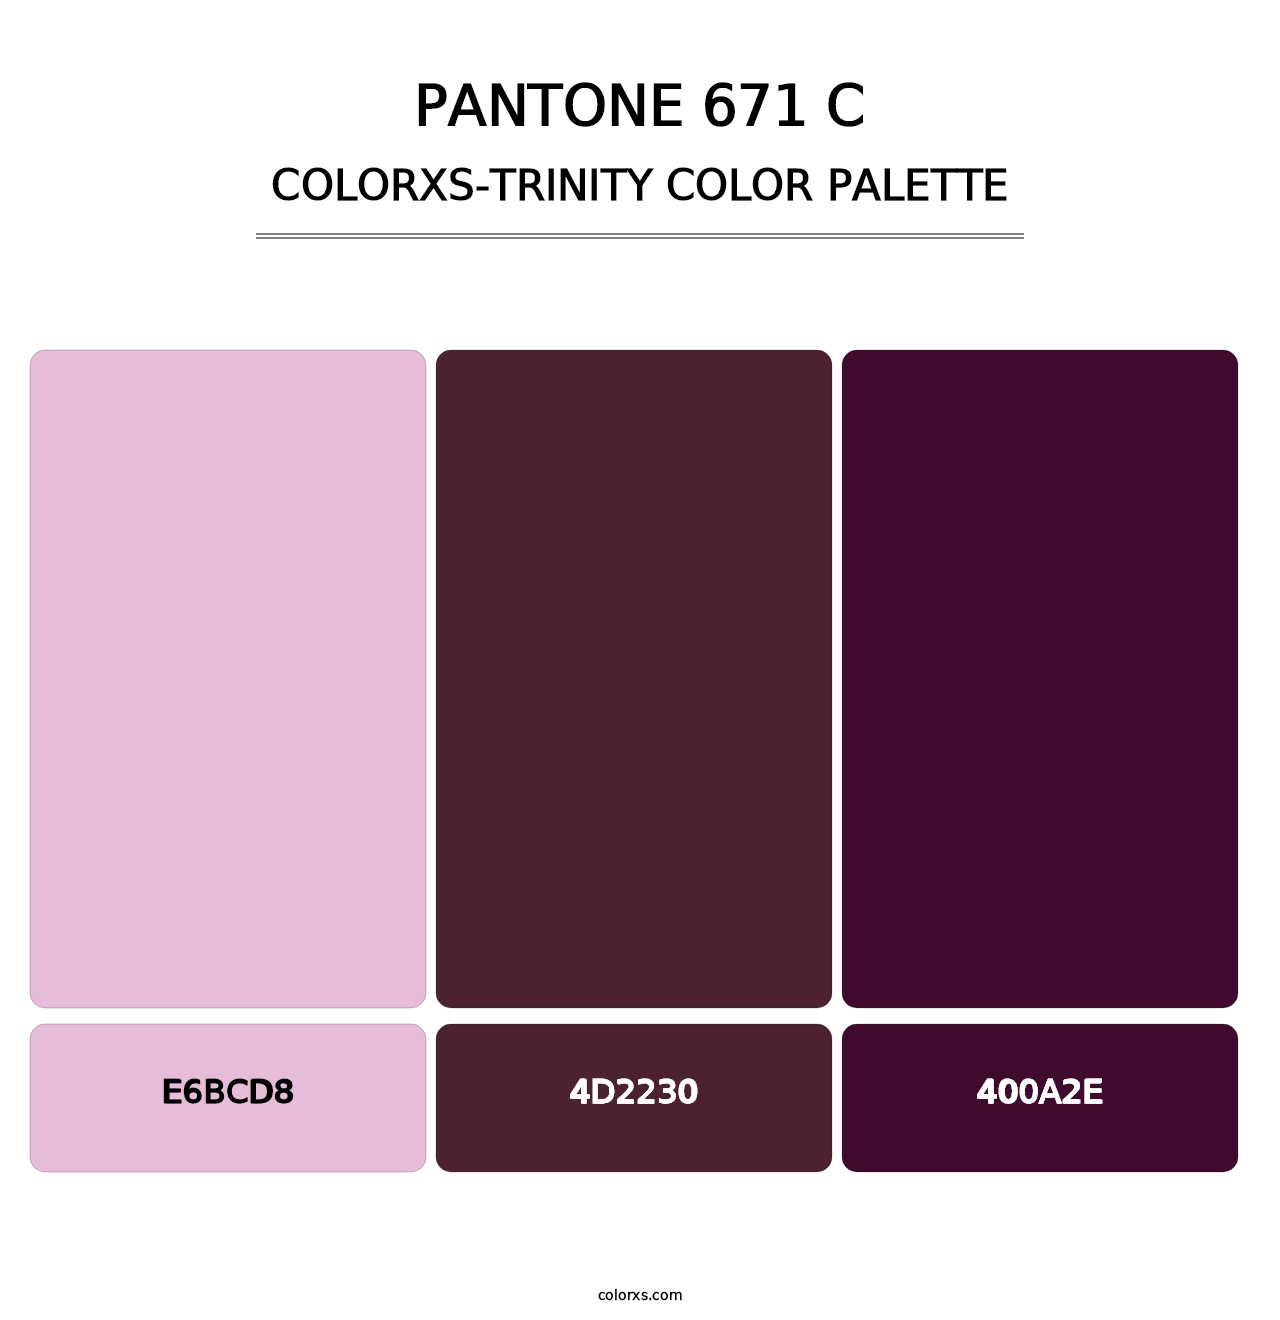 PANTONE 671 C - Colorxs Trinity Palette